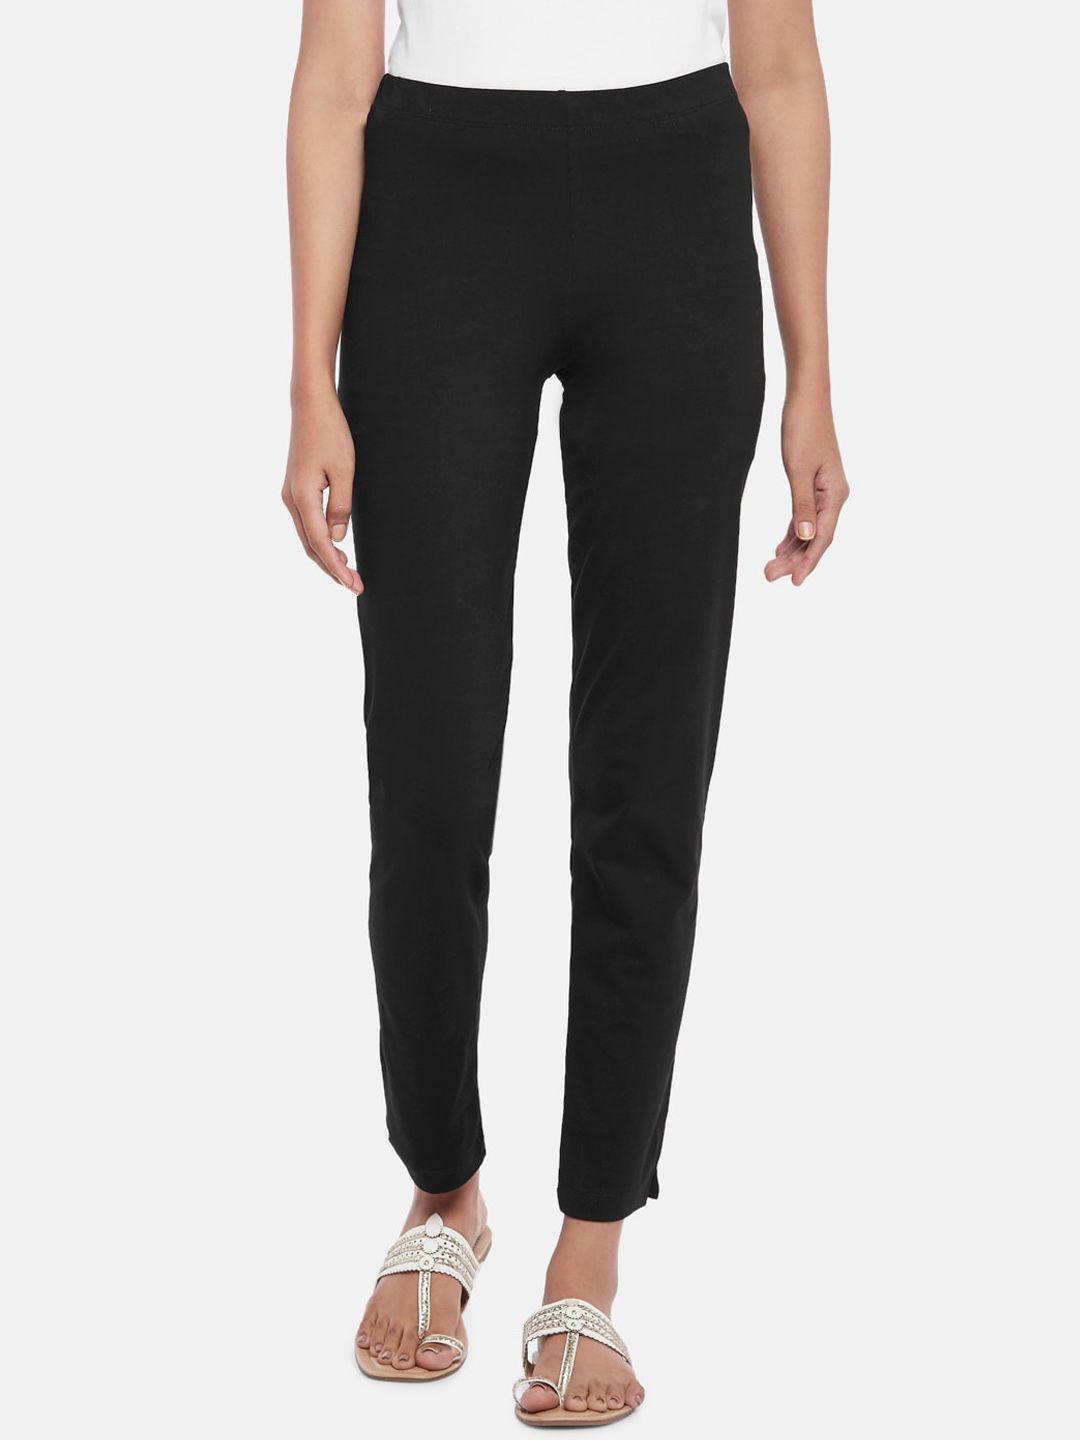 rangmanch by pantaloons women black solid regular leggings